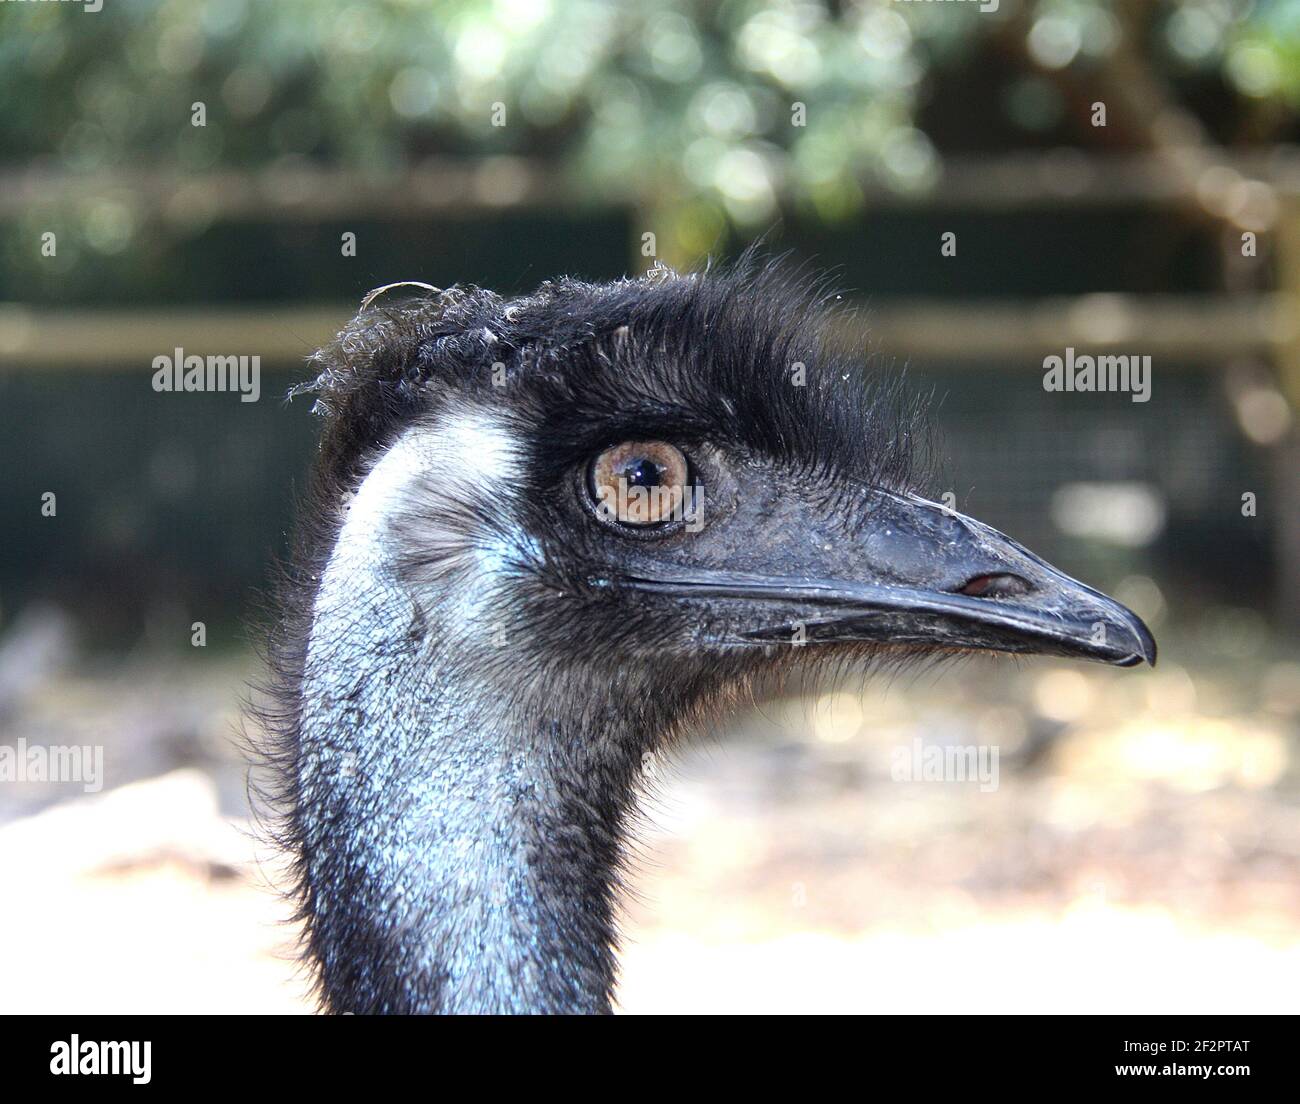 An Emu Head Stock Photo